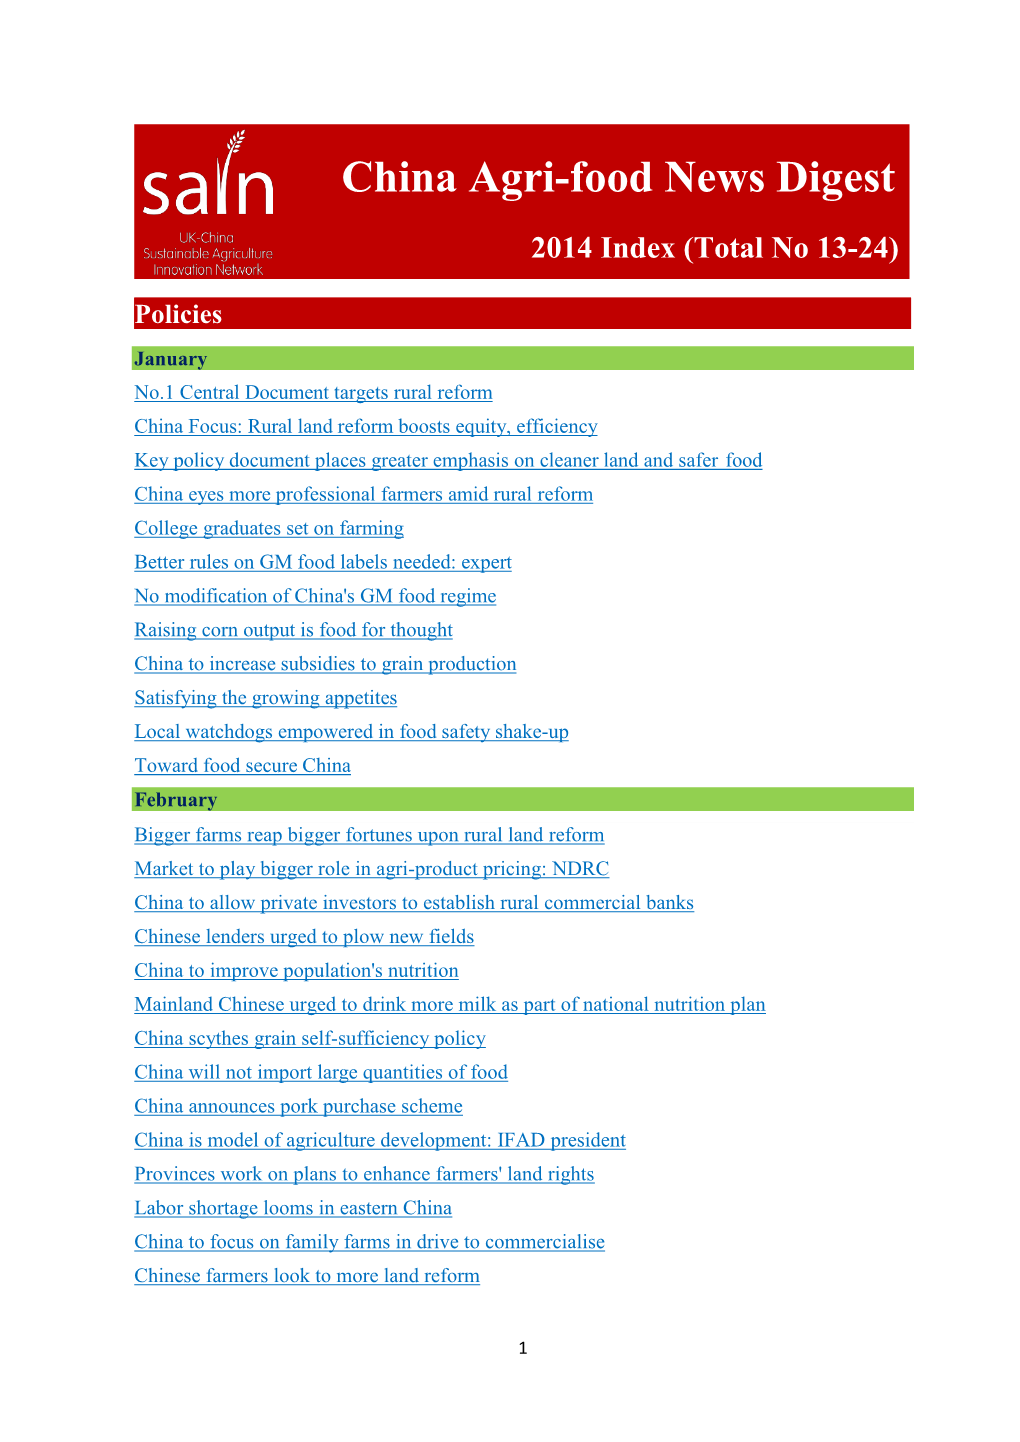 China Agri-Food News Digest 2014 Index